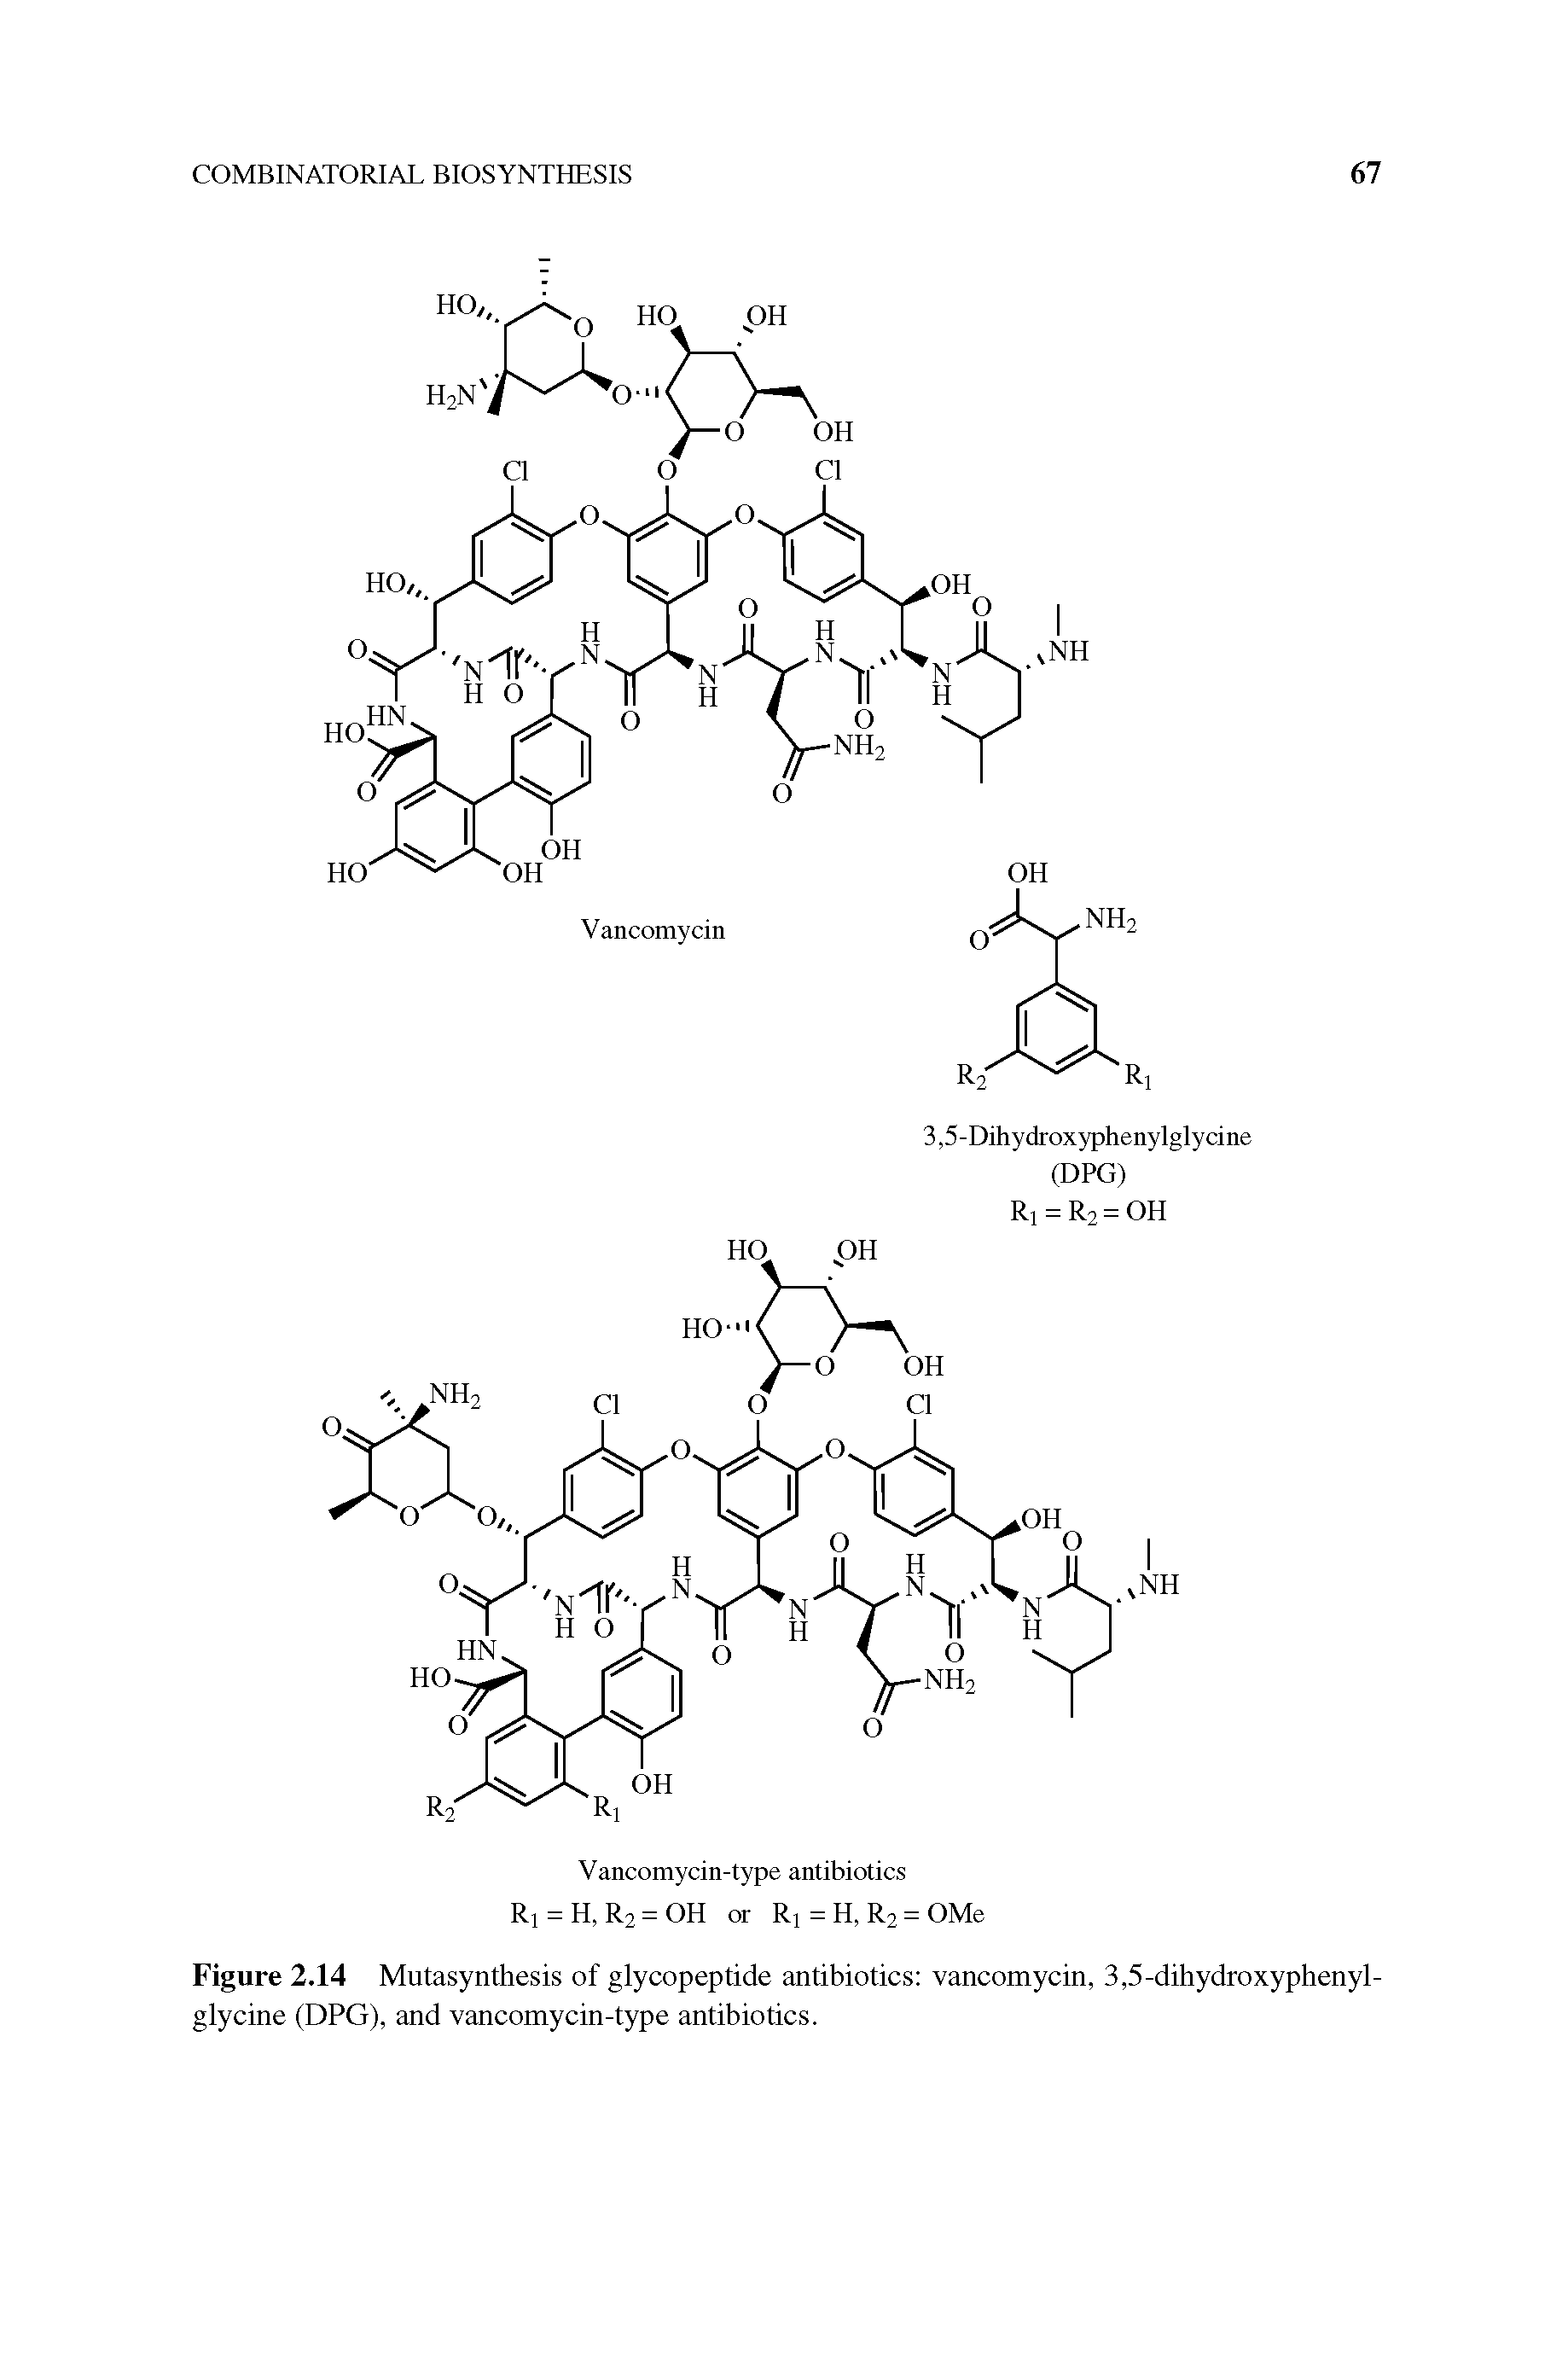 Figure 2.14 Mutasynthesis of glycopeptide antibiotics vancomycin, 3,5-dihydroxyphenyl-glycine (DPG), and vancomycin-type antibiotics.